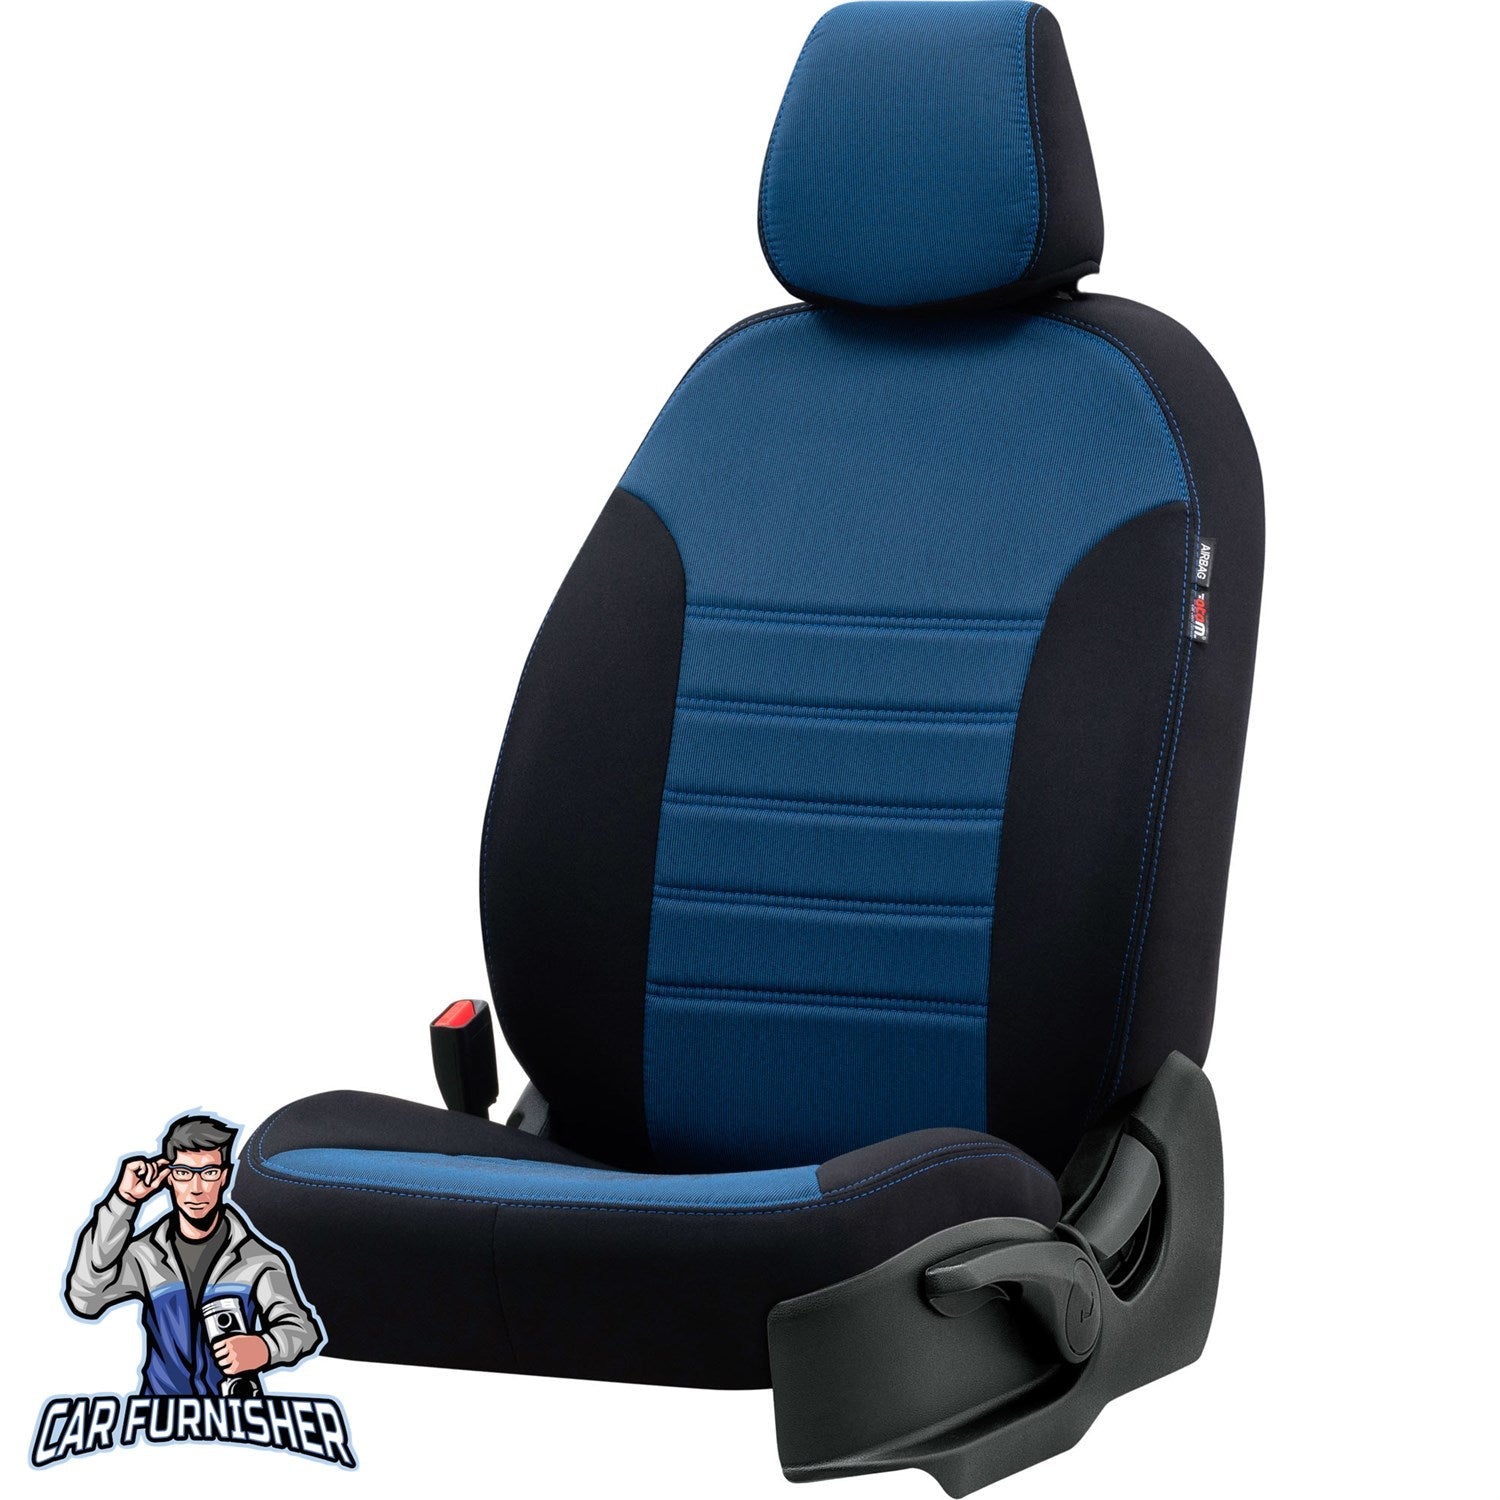 Man TGE Seat Covers Original Jacquard Design Blue Jacquard Fabric